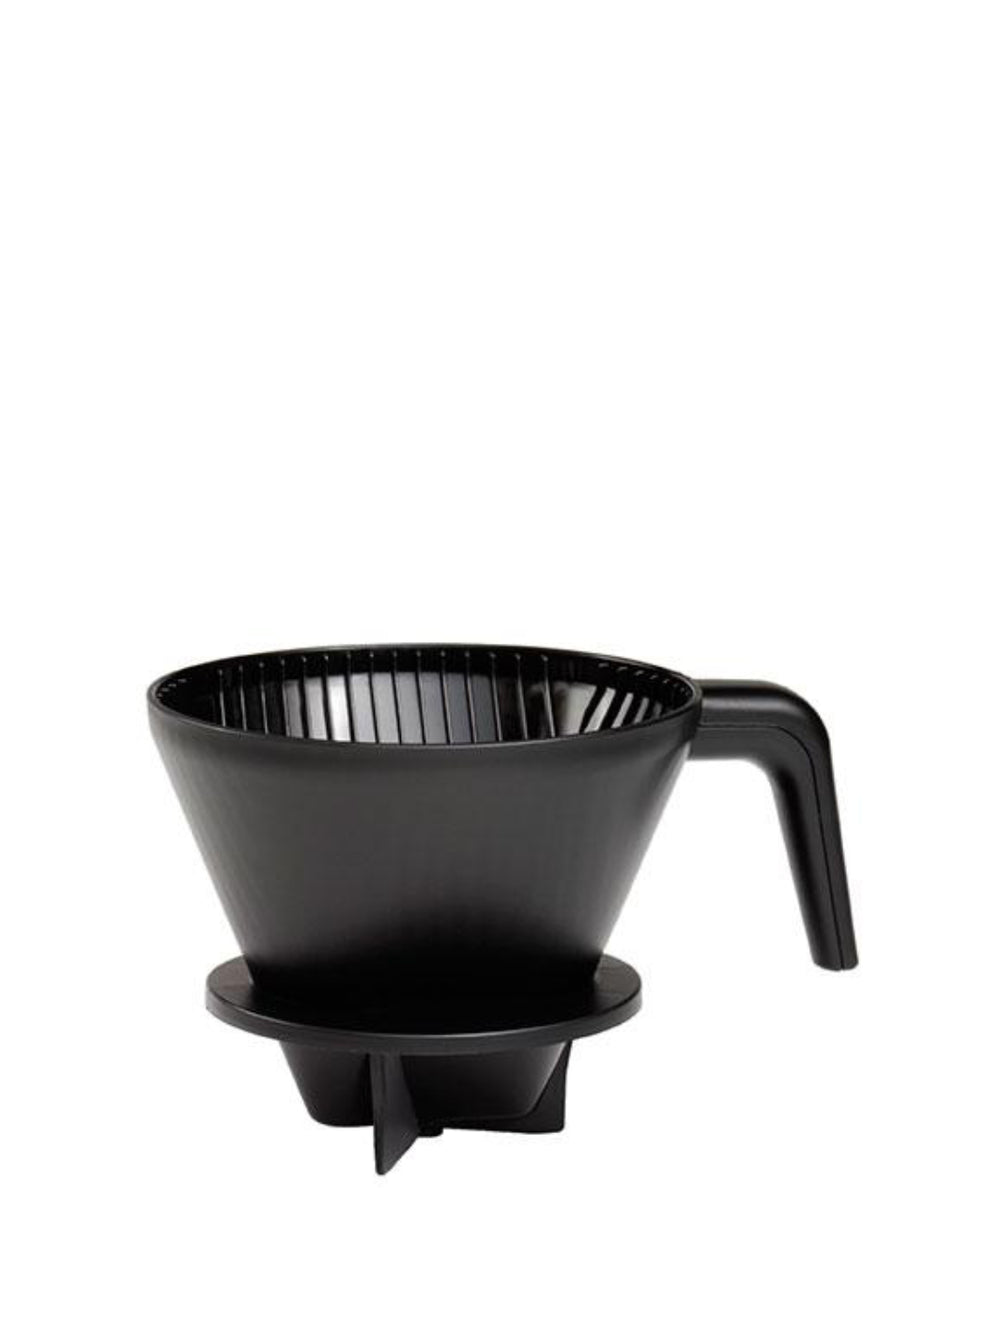 BONAVITA Replacement Filter Basket (5-Cup) (for BV1500TS)